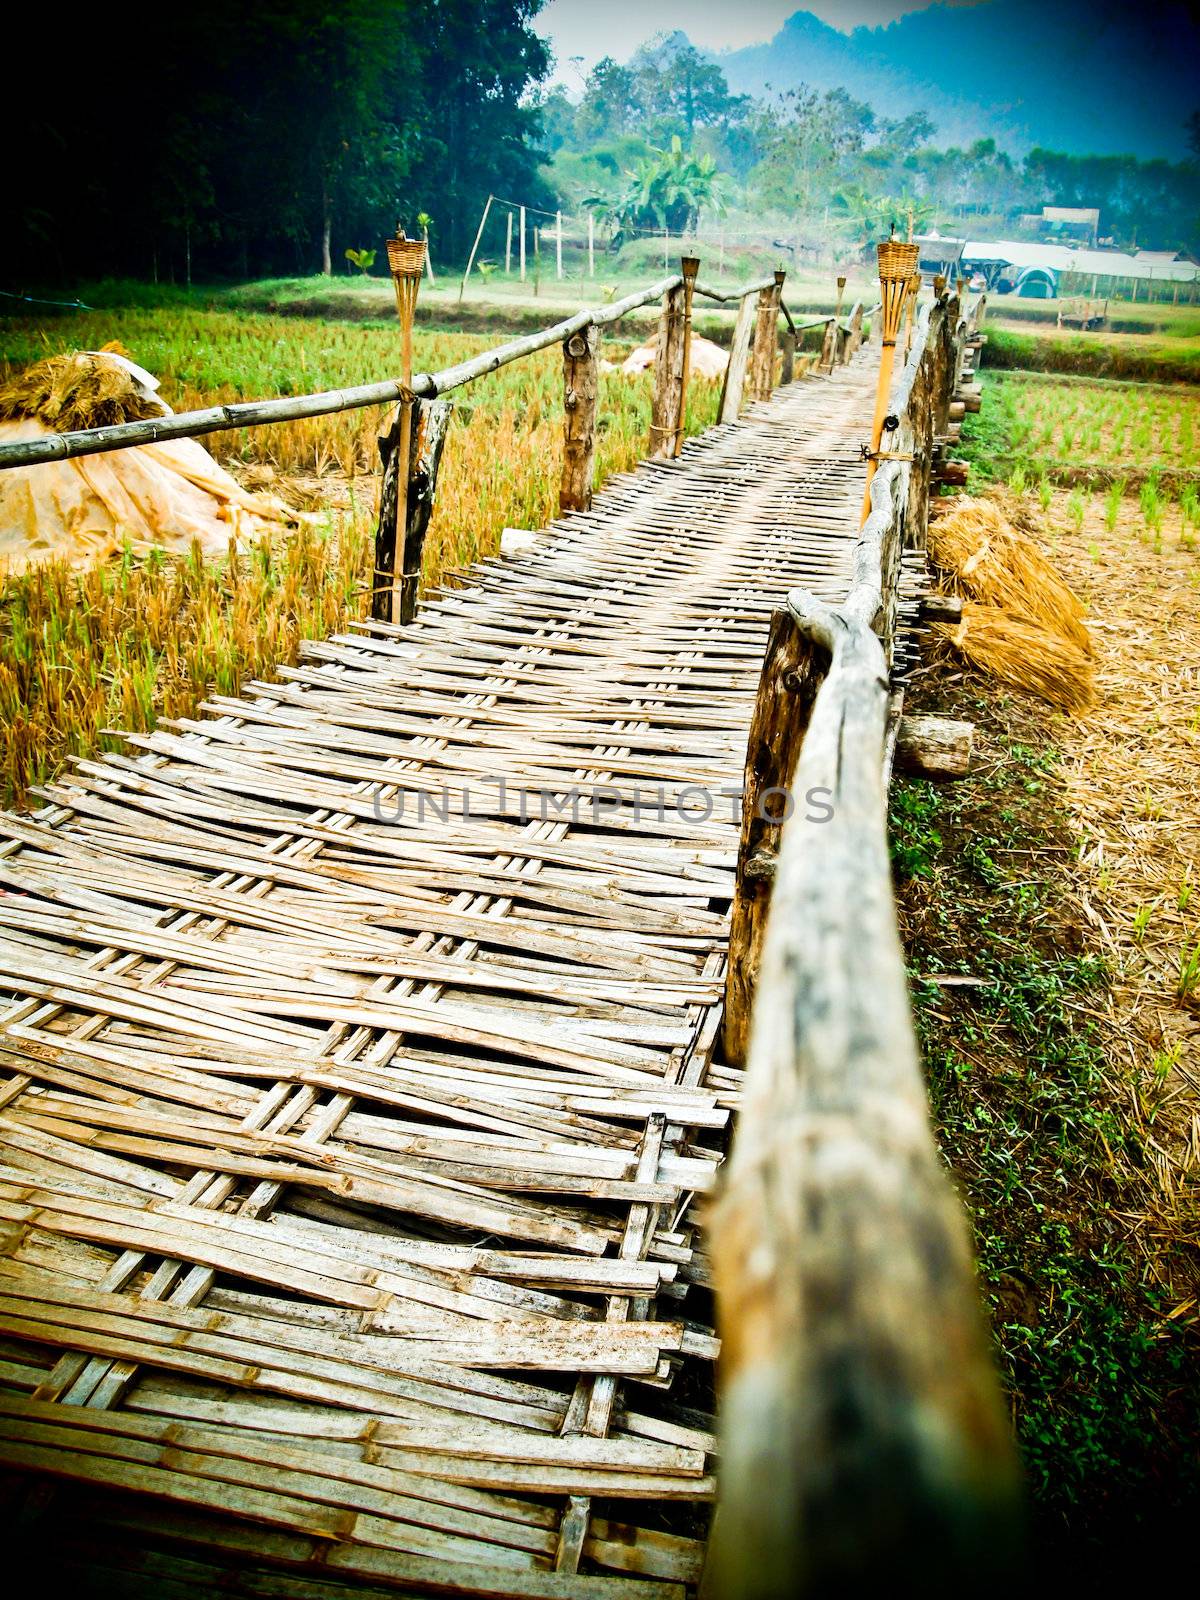 Bamboo bridge3 by gjeerawut